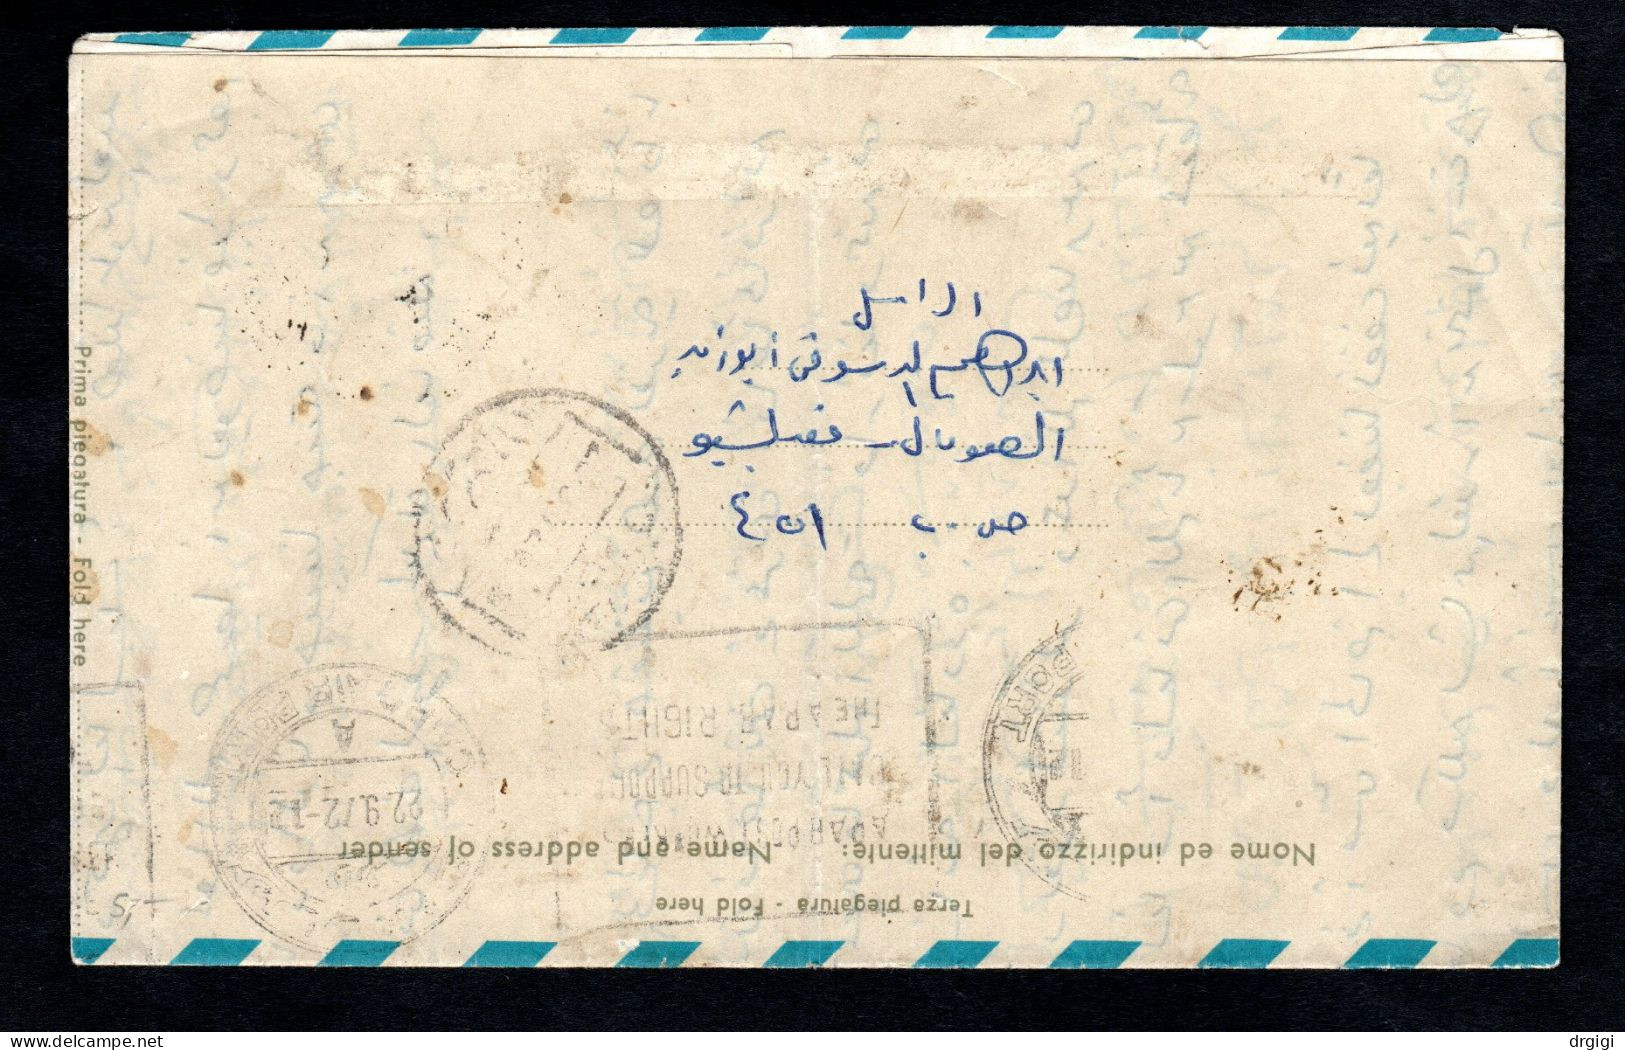 SOMALIA, 1972, INTERO POSTALE A 3 CEI, MOGADISCIO X L'EGITTO, AEROGRAMMA - Somalia